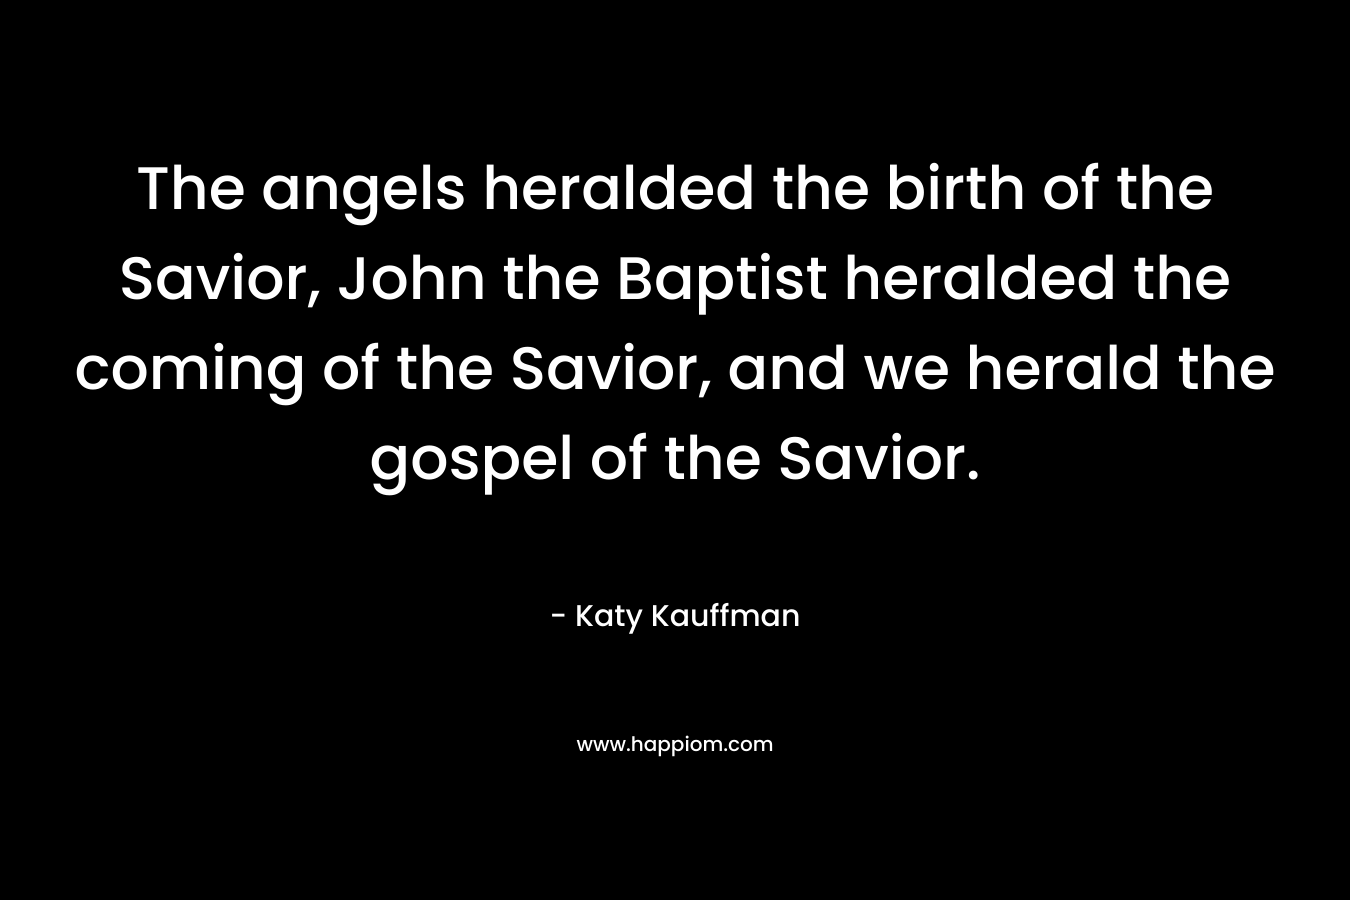 The angels heralded the birth of the Savior, John the Baptist heralded the coming of the Savior, and we herald the gospel of the Savior. – Katy Kauffman